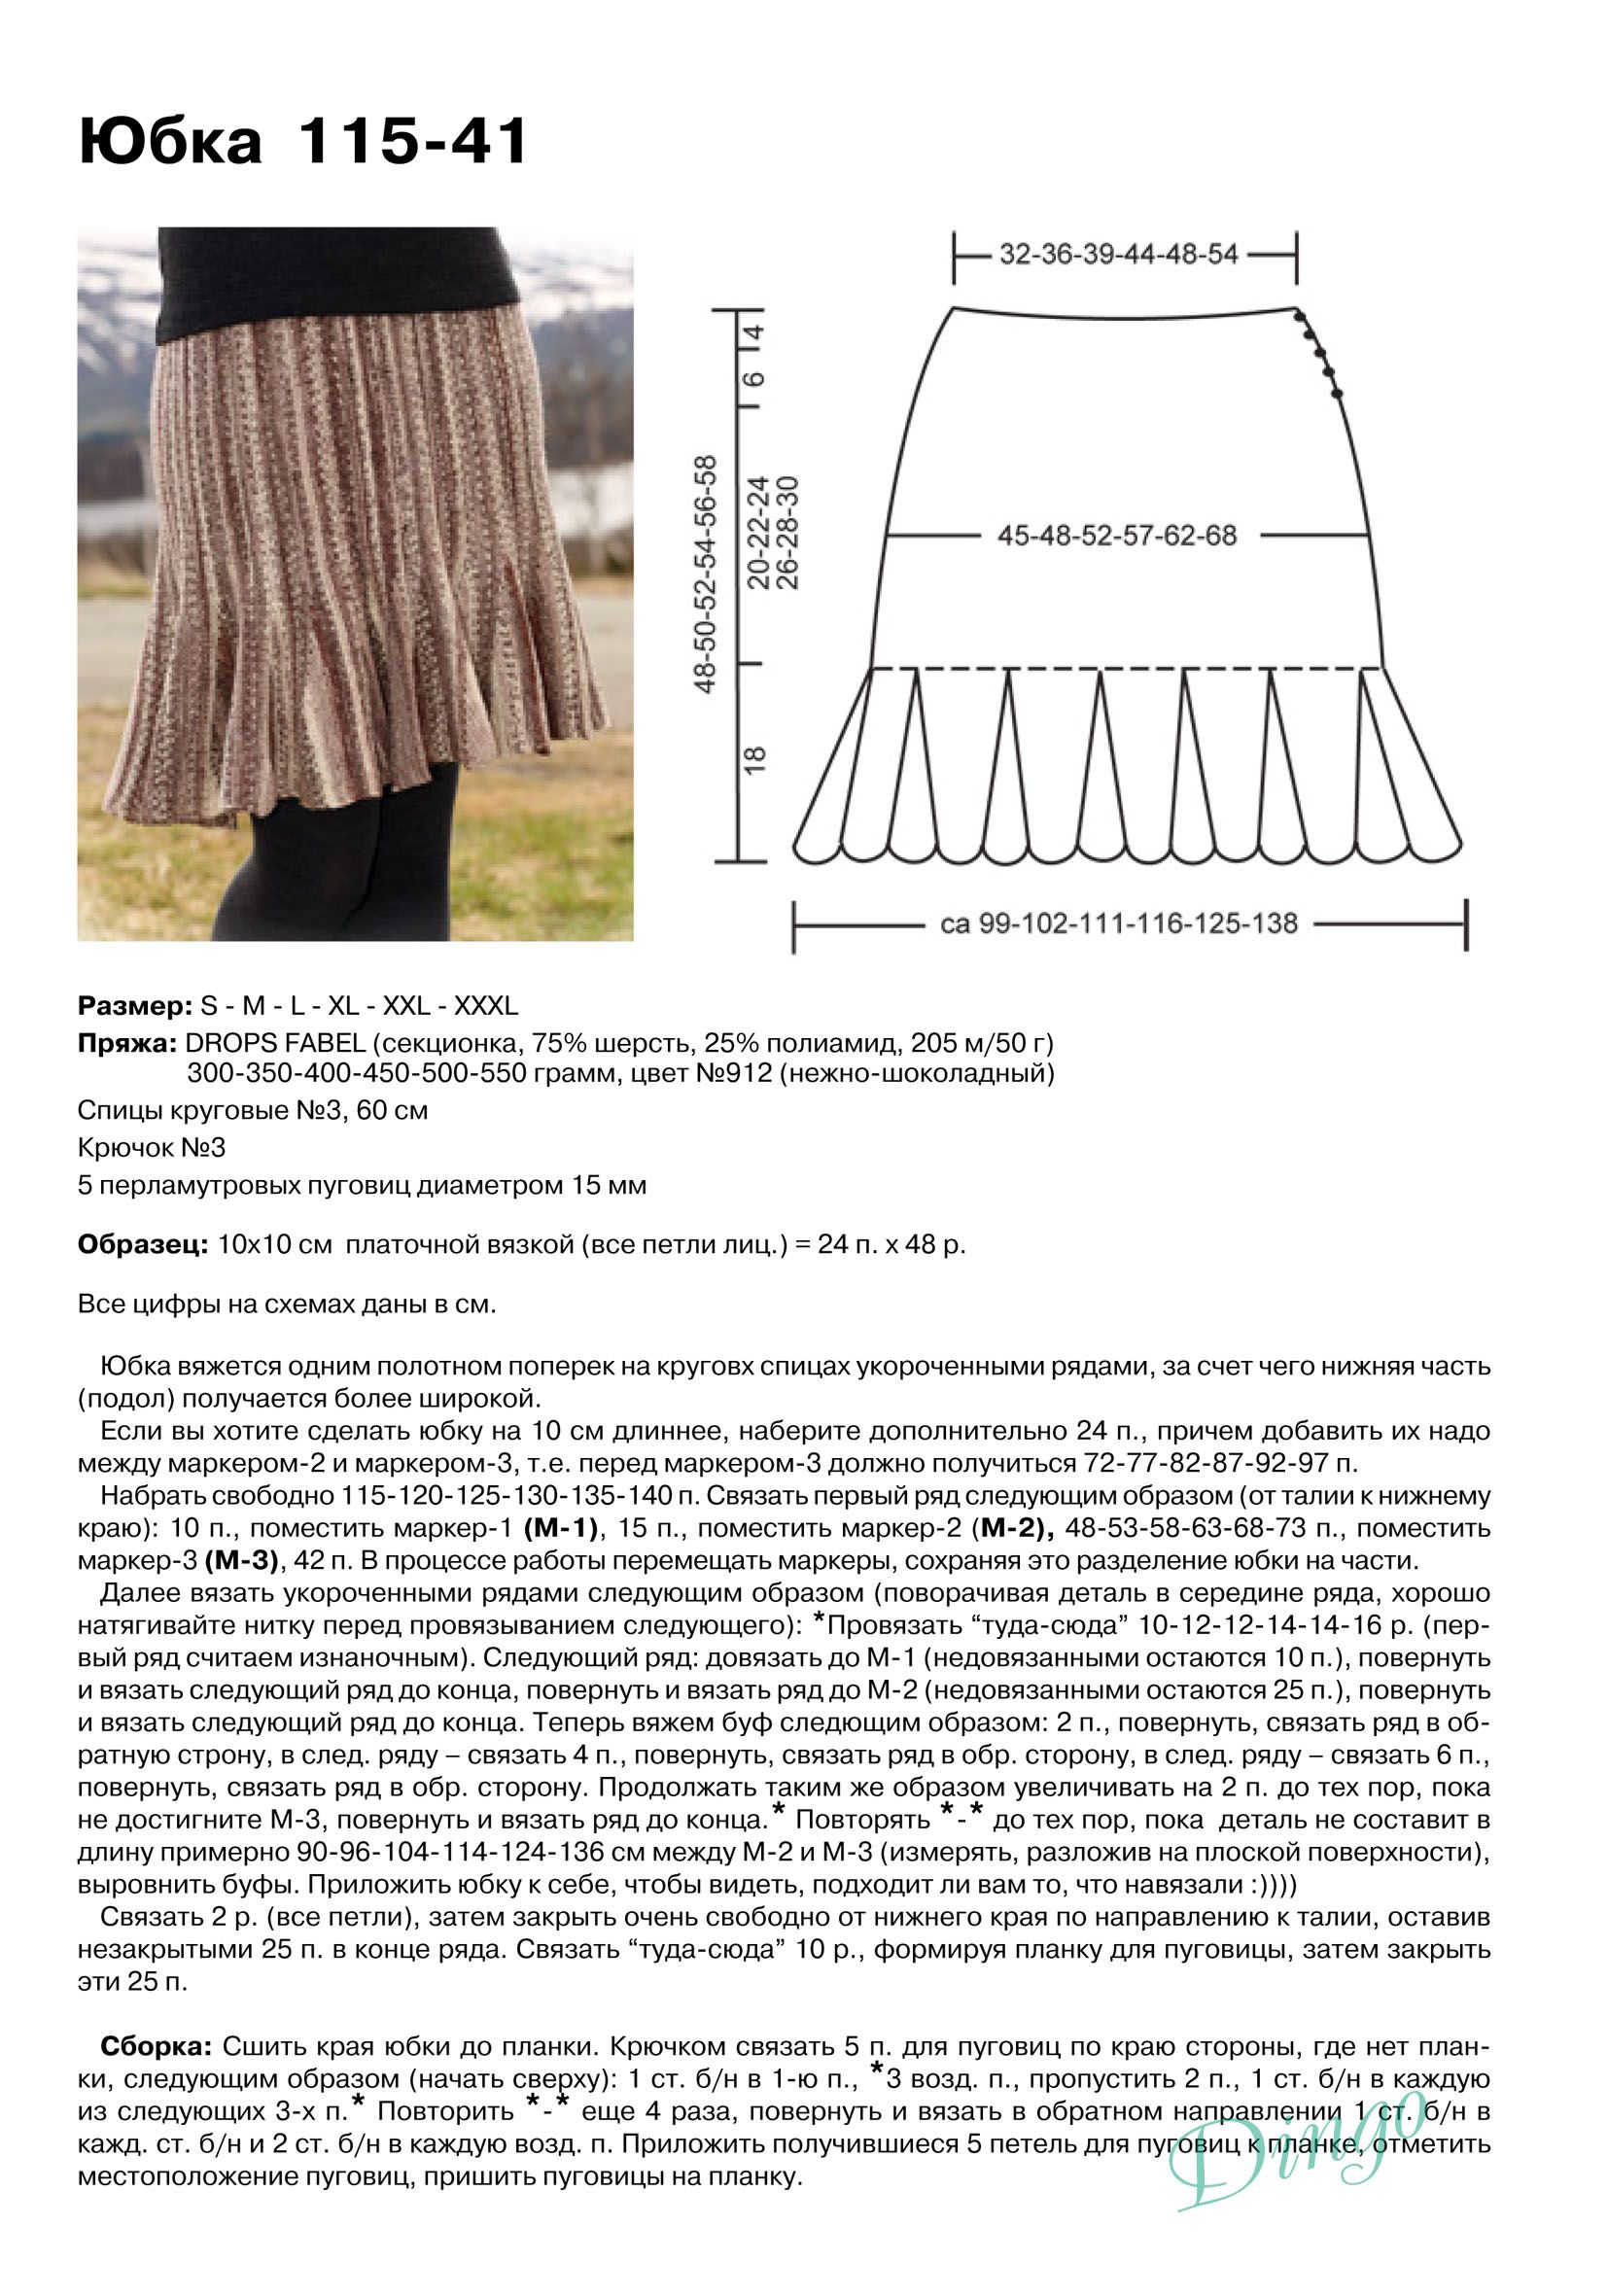 Вязание юбки своими руками - инструкция с описанием и схемами (фото + видео)